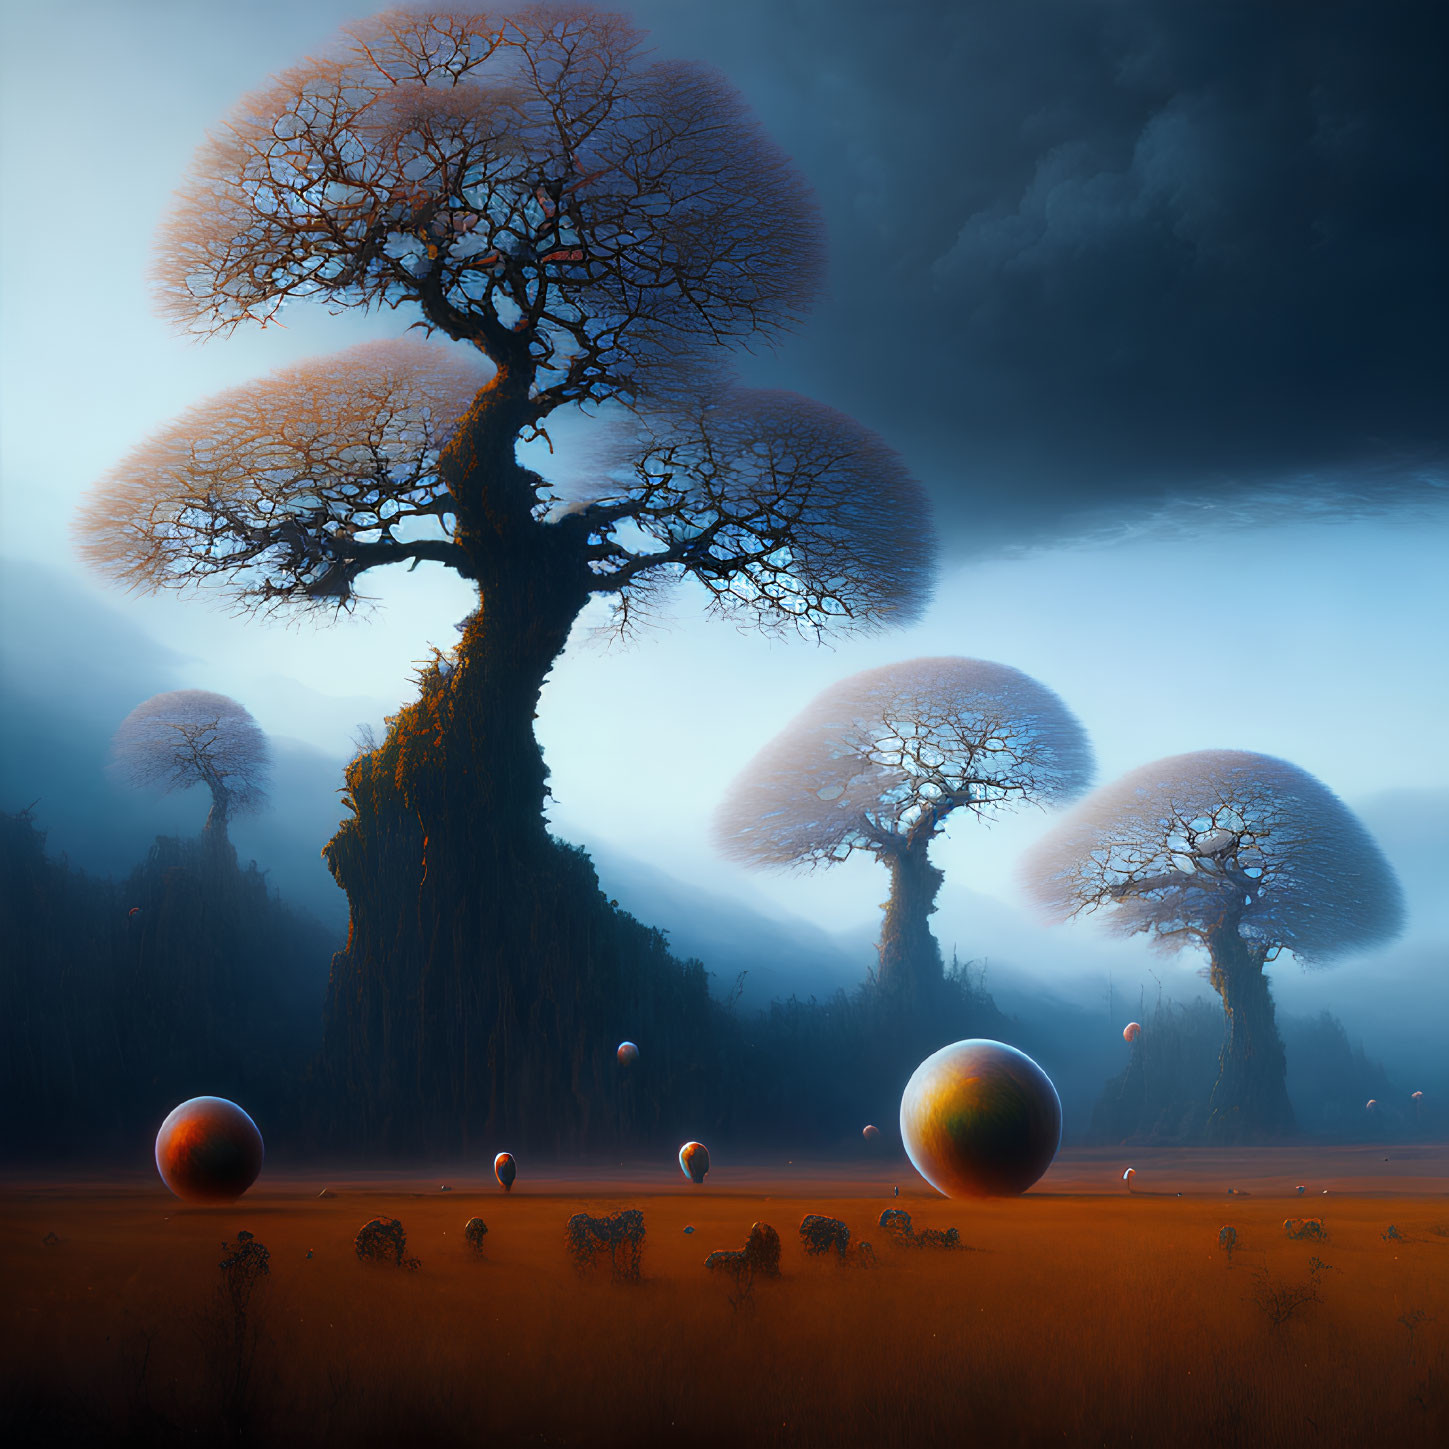 Surreal Landscape: Oversized Baobab Trees & Floating Spheres